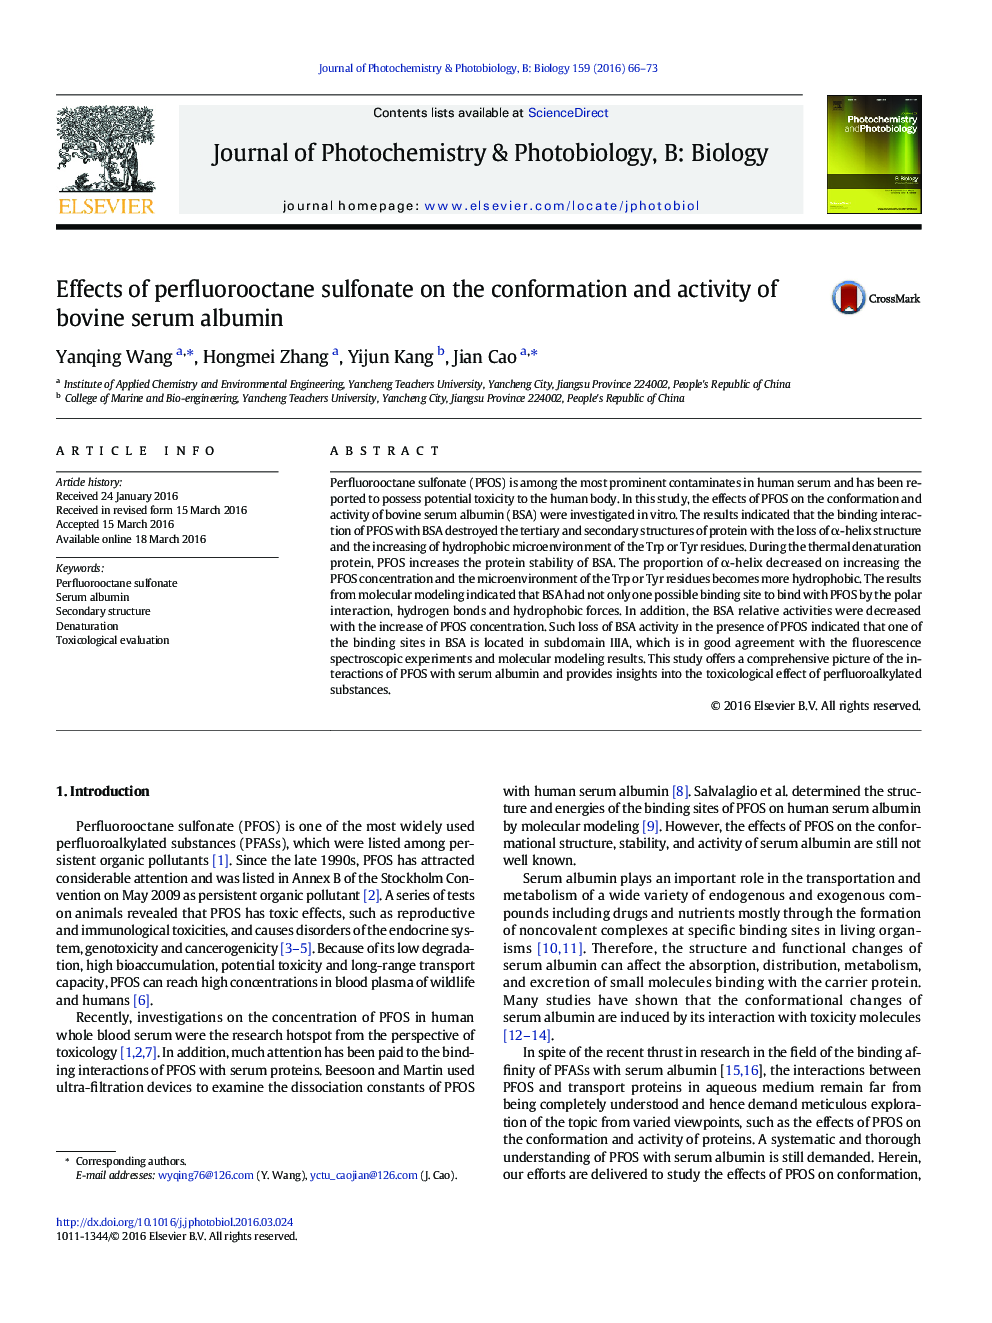 اثرات perfluorooctane sulfonate بر ترکیب و فعالیت آلبومین سرم گاو